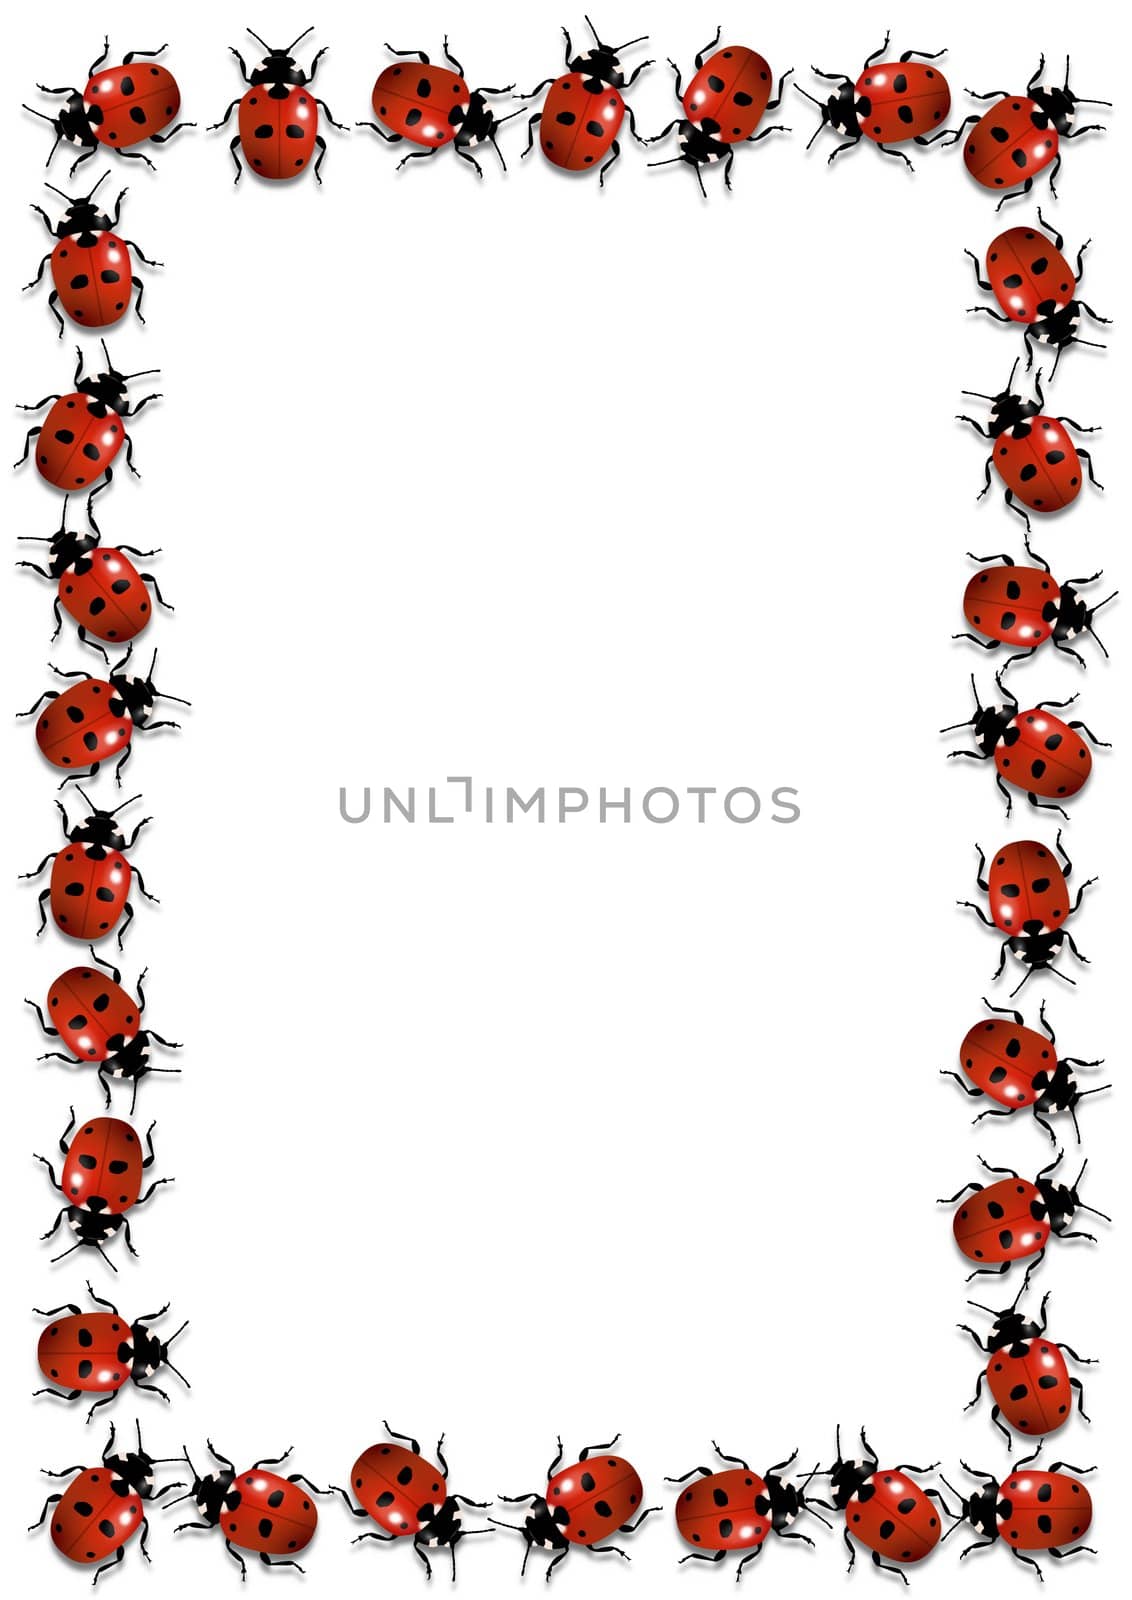 Illustration of a frame made of ladybirds